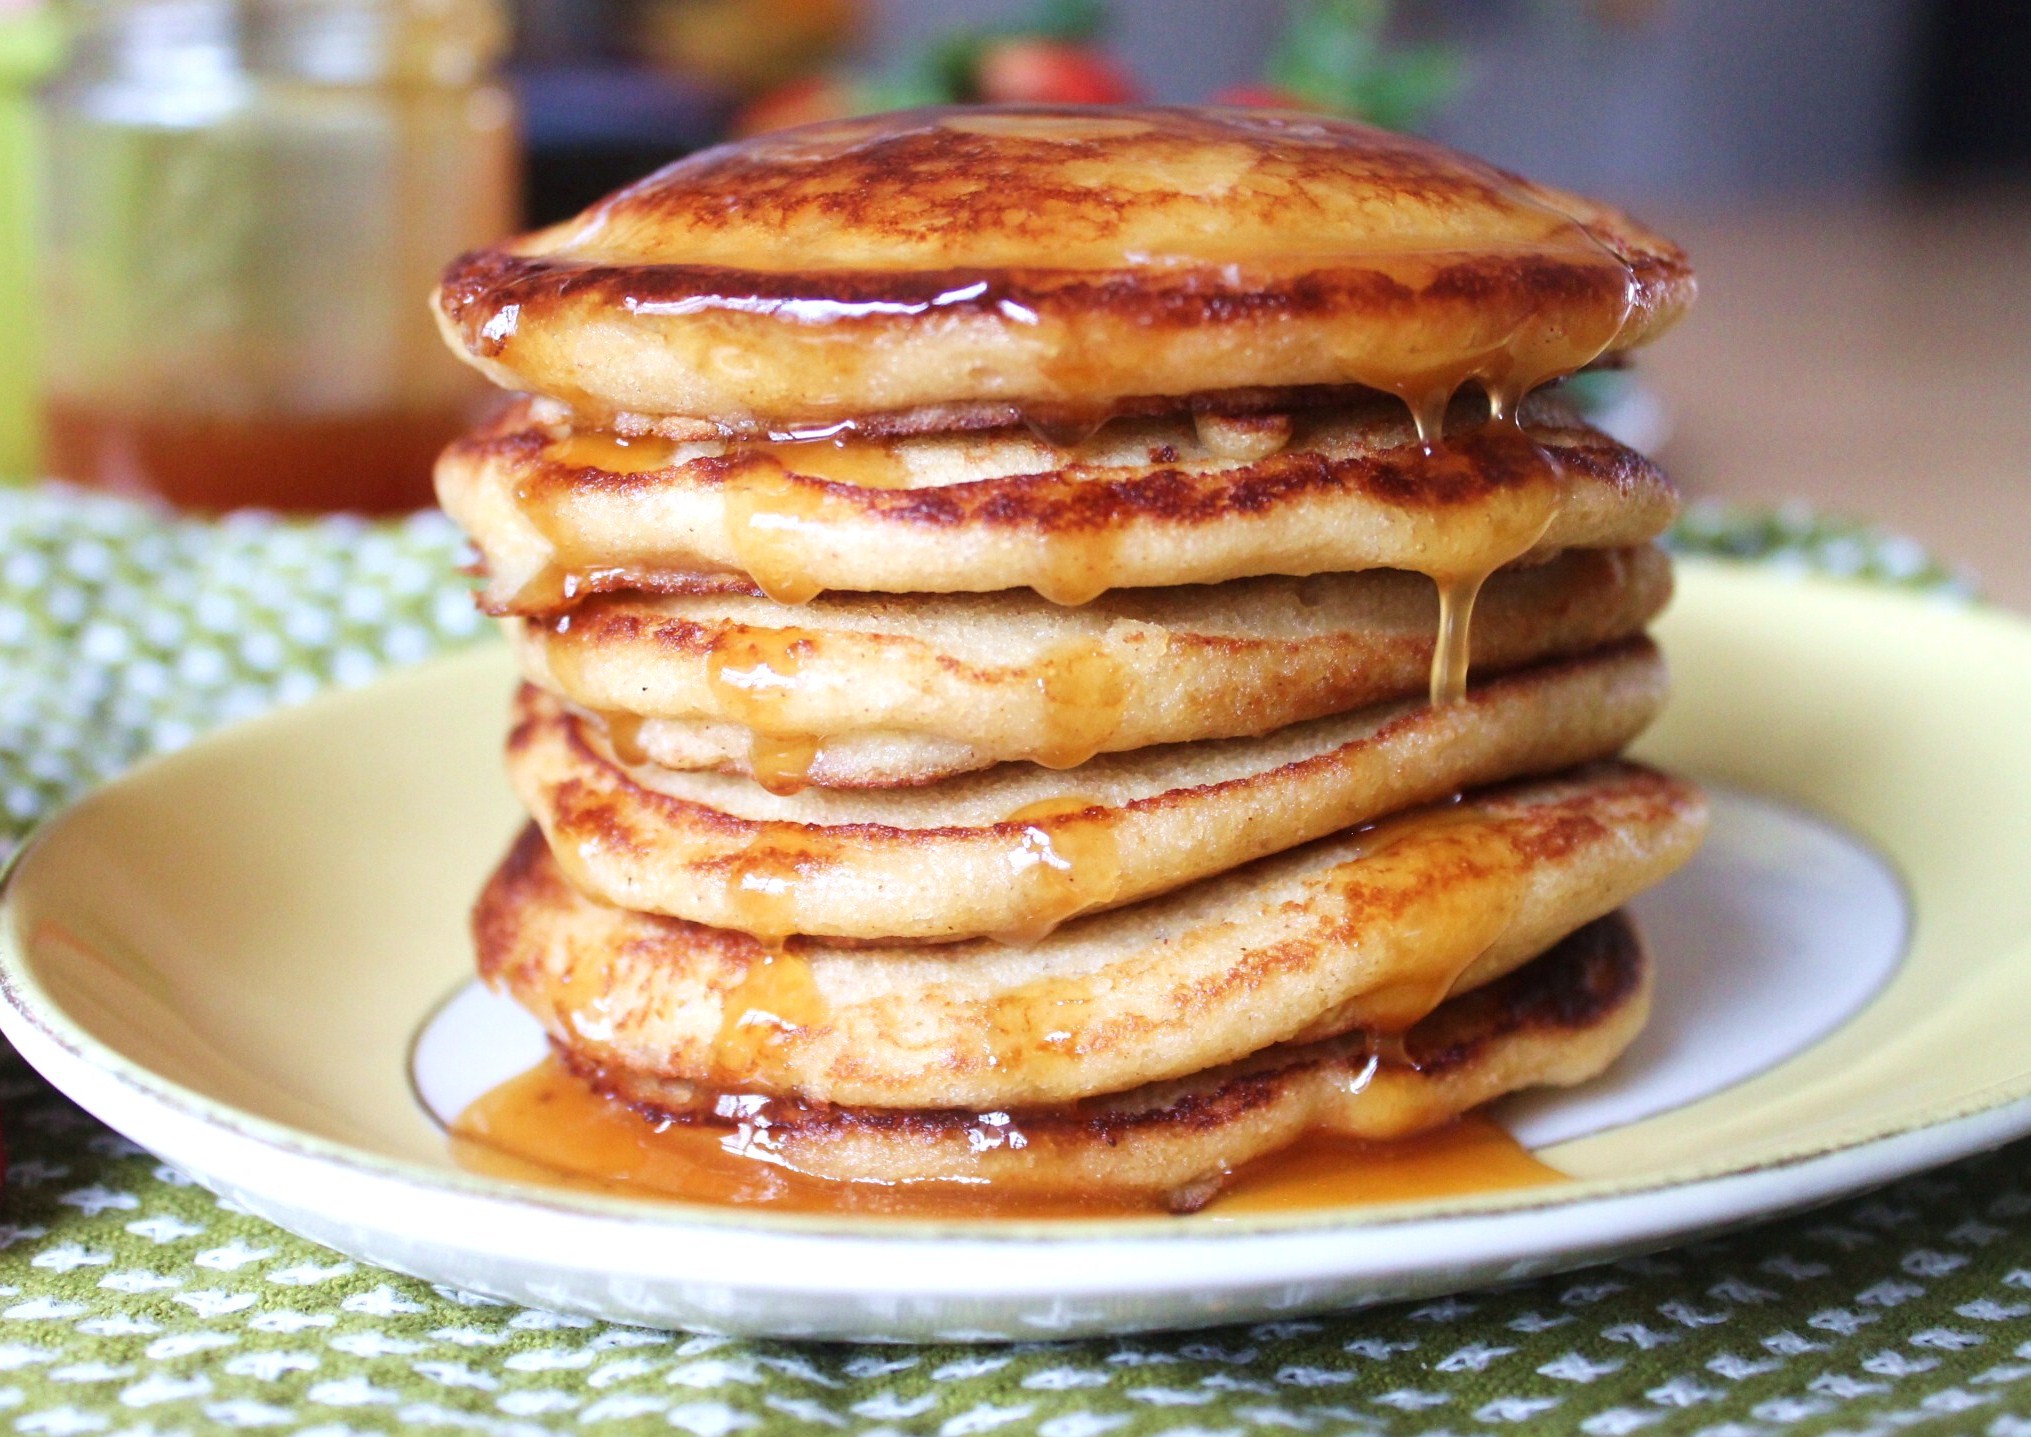 Gatlinburg Breakfast Guide! Top Pancake Restaurant Recommendations